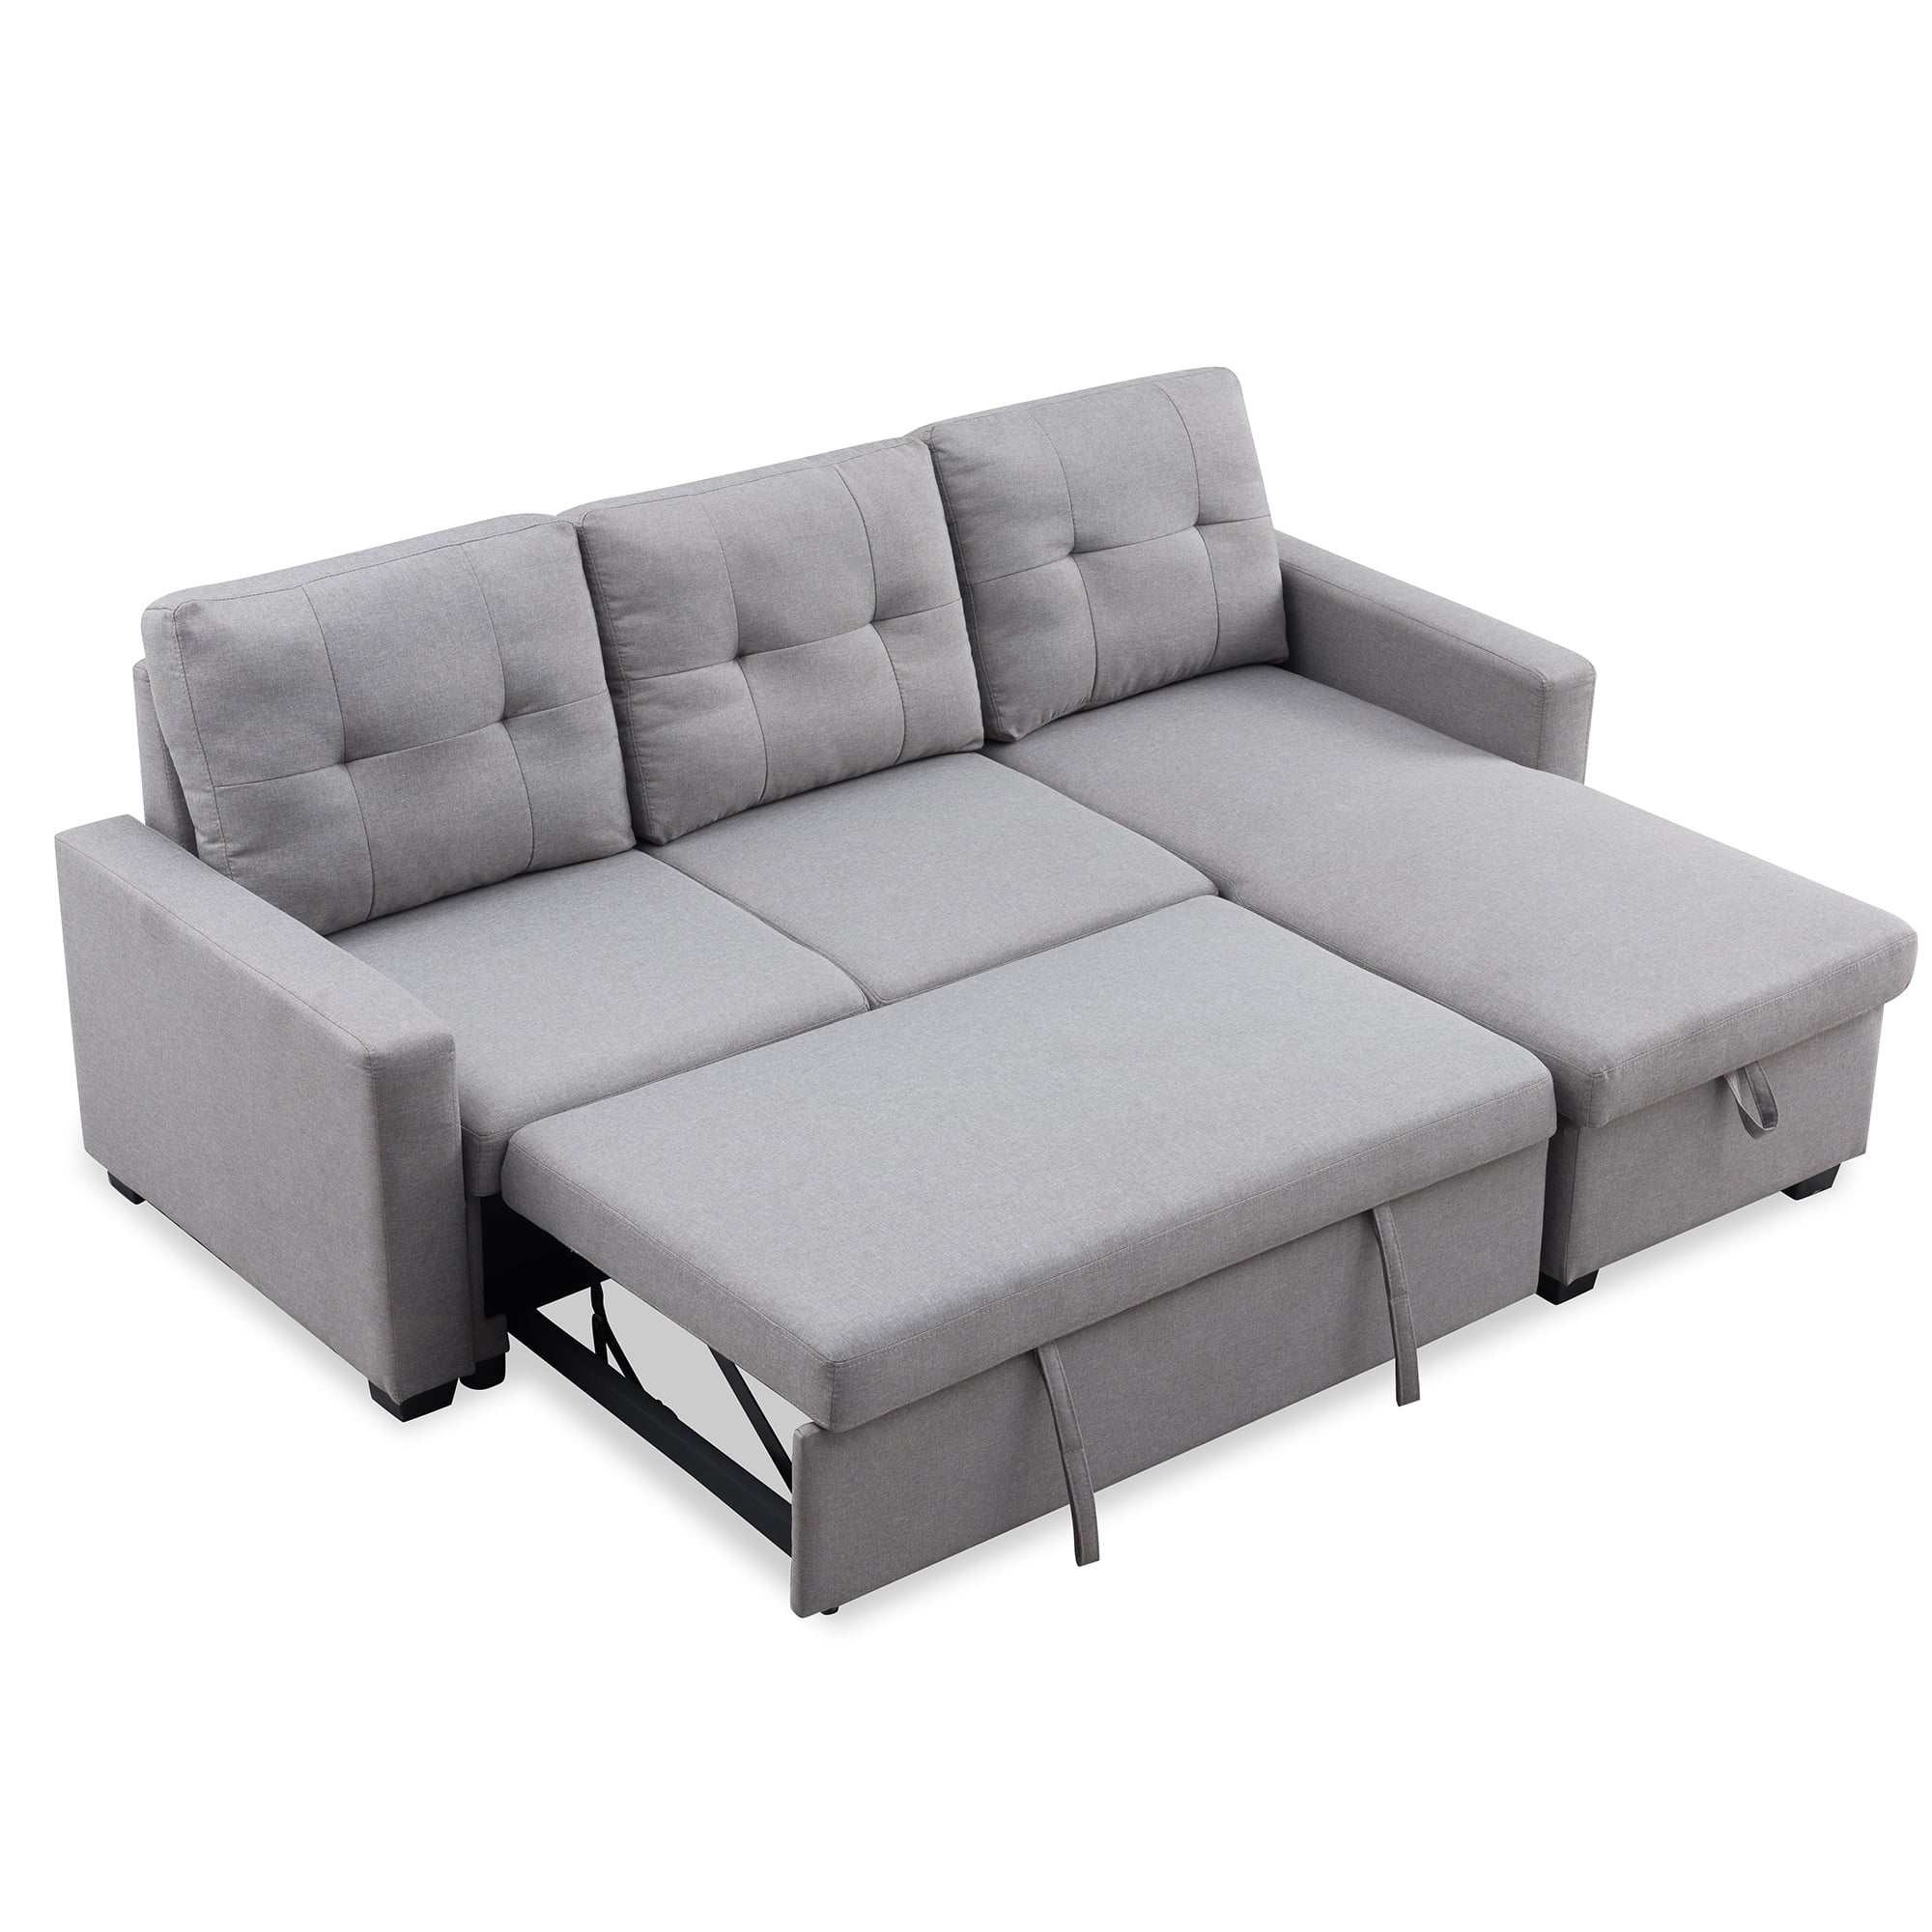 Segmart 82 X 60 X 35 Modern Sectional Upholstery Sofa Contemporary